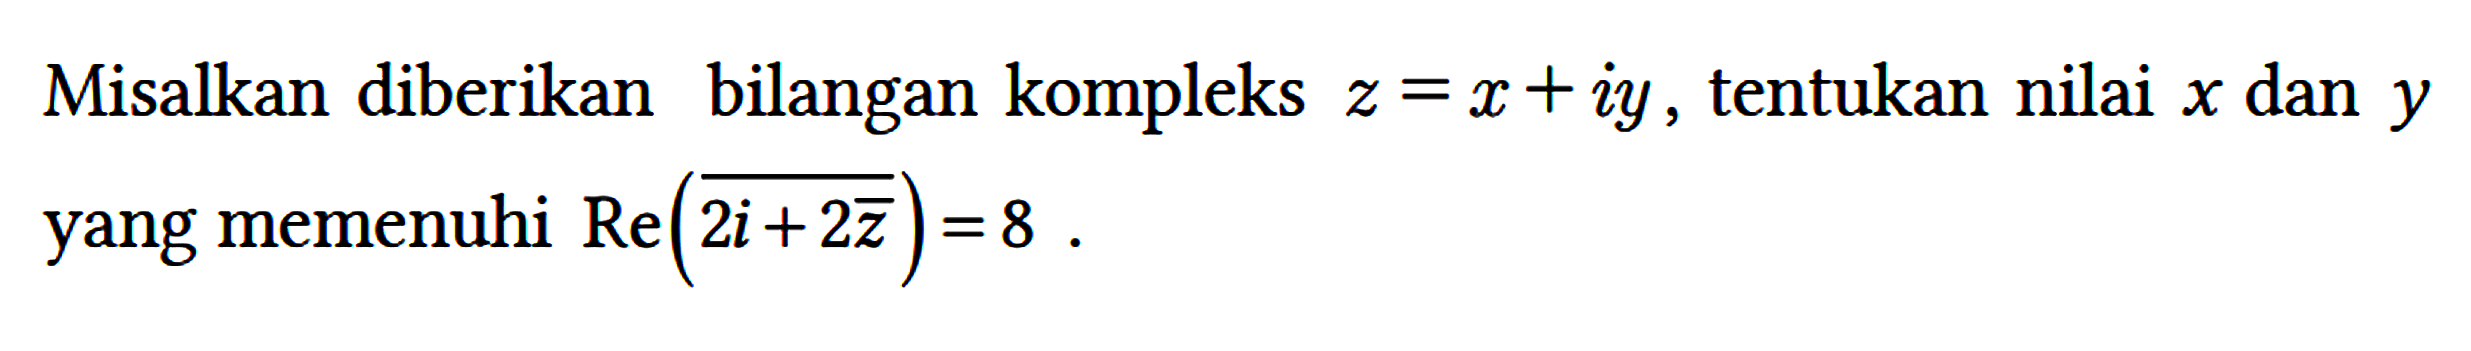 Misalkan diberikan bilangan kompleks z = x + iy, tentukan nilai x dan y yang memenuhi Re(2i + 2z)) = 8.